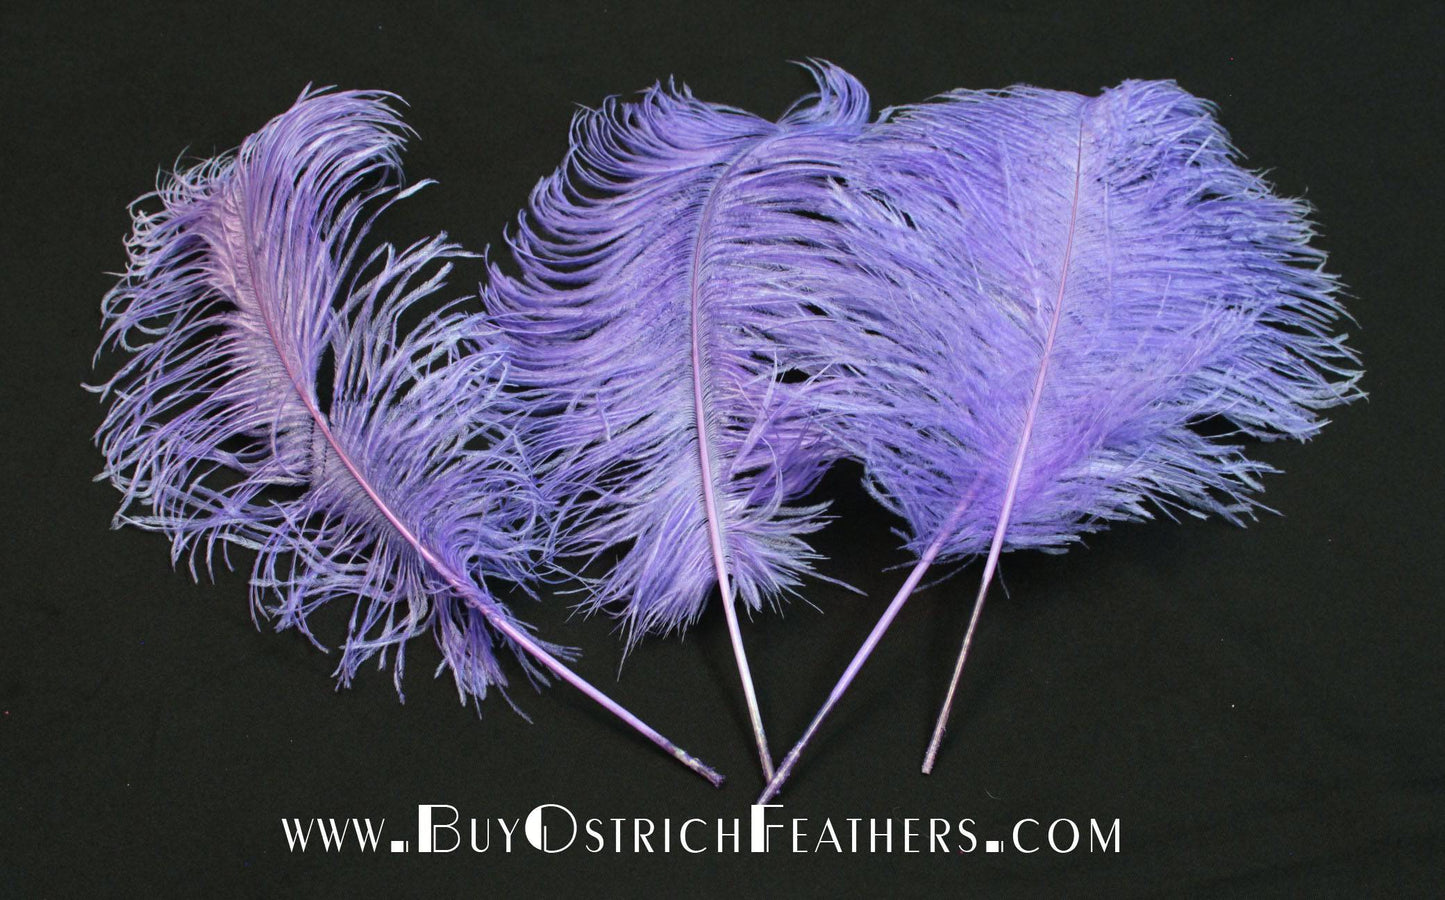 BULK 1/2lb Ostrich Feather Tail Plumes 15-20 (Black) for Sale Online